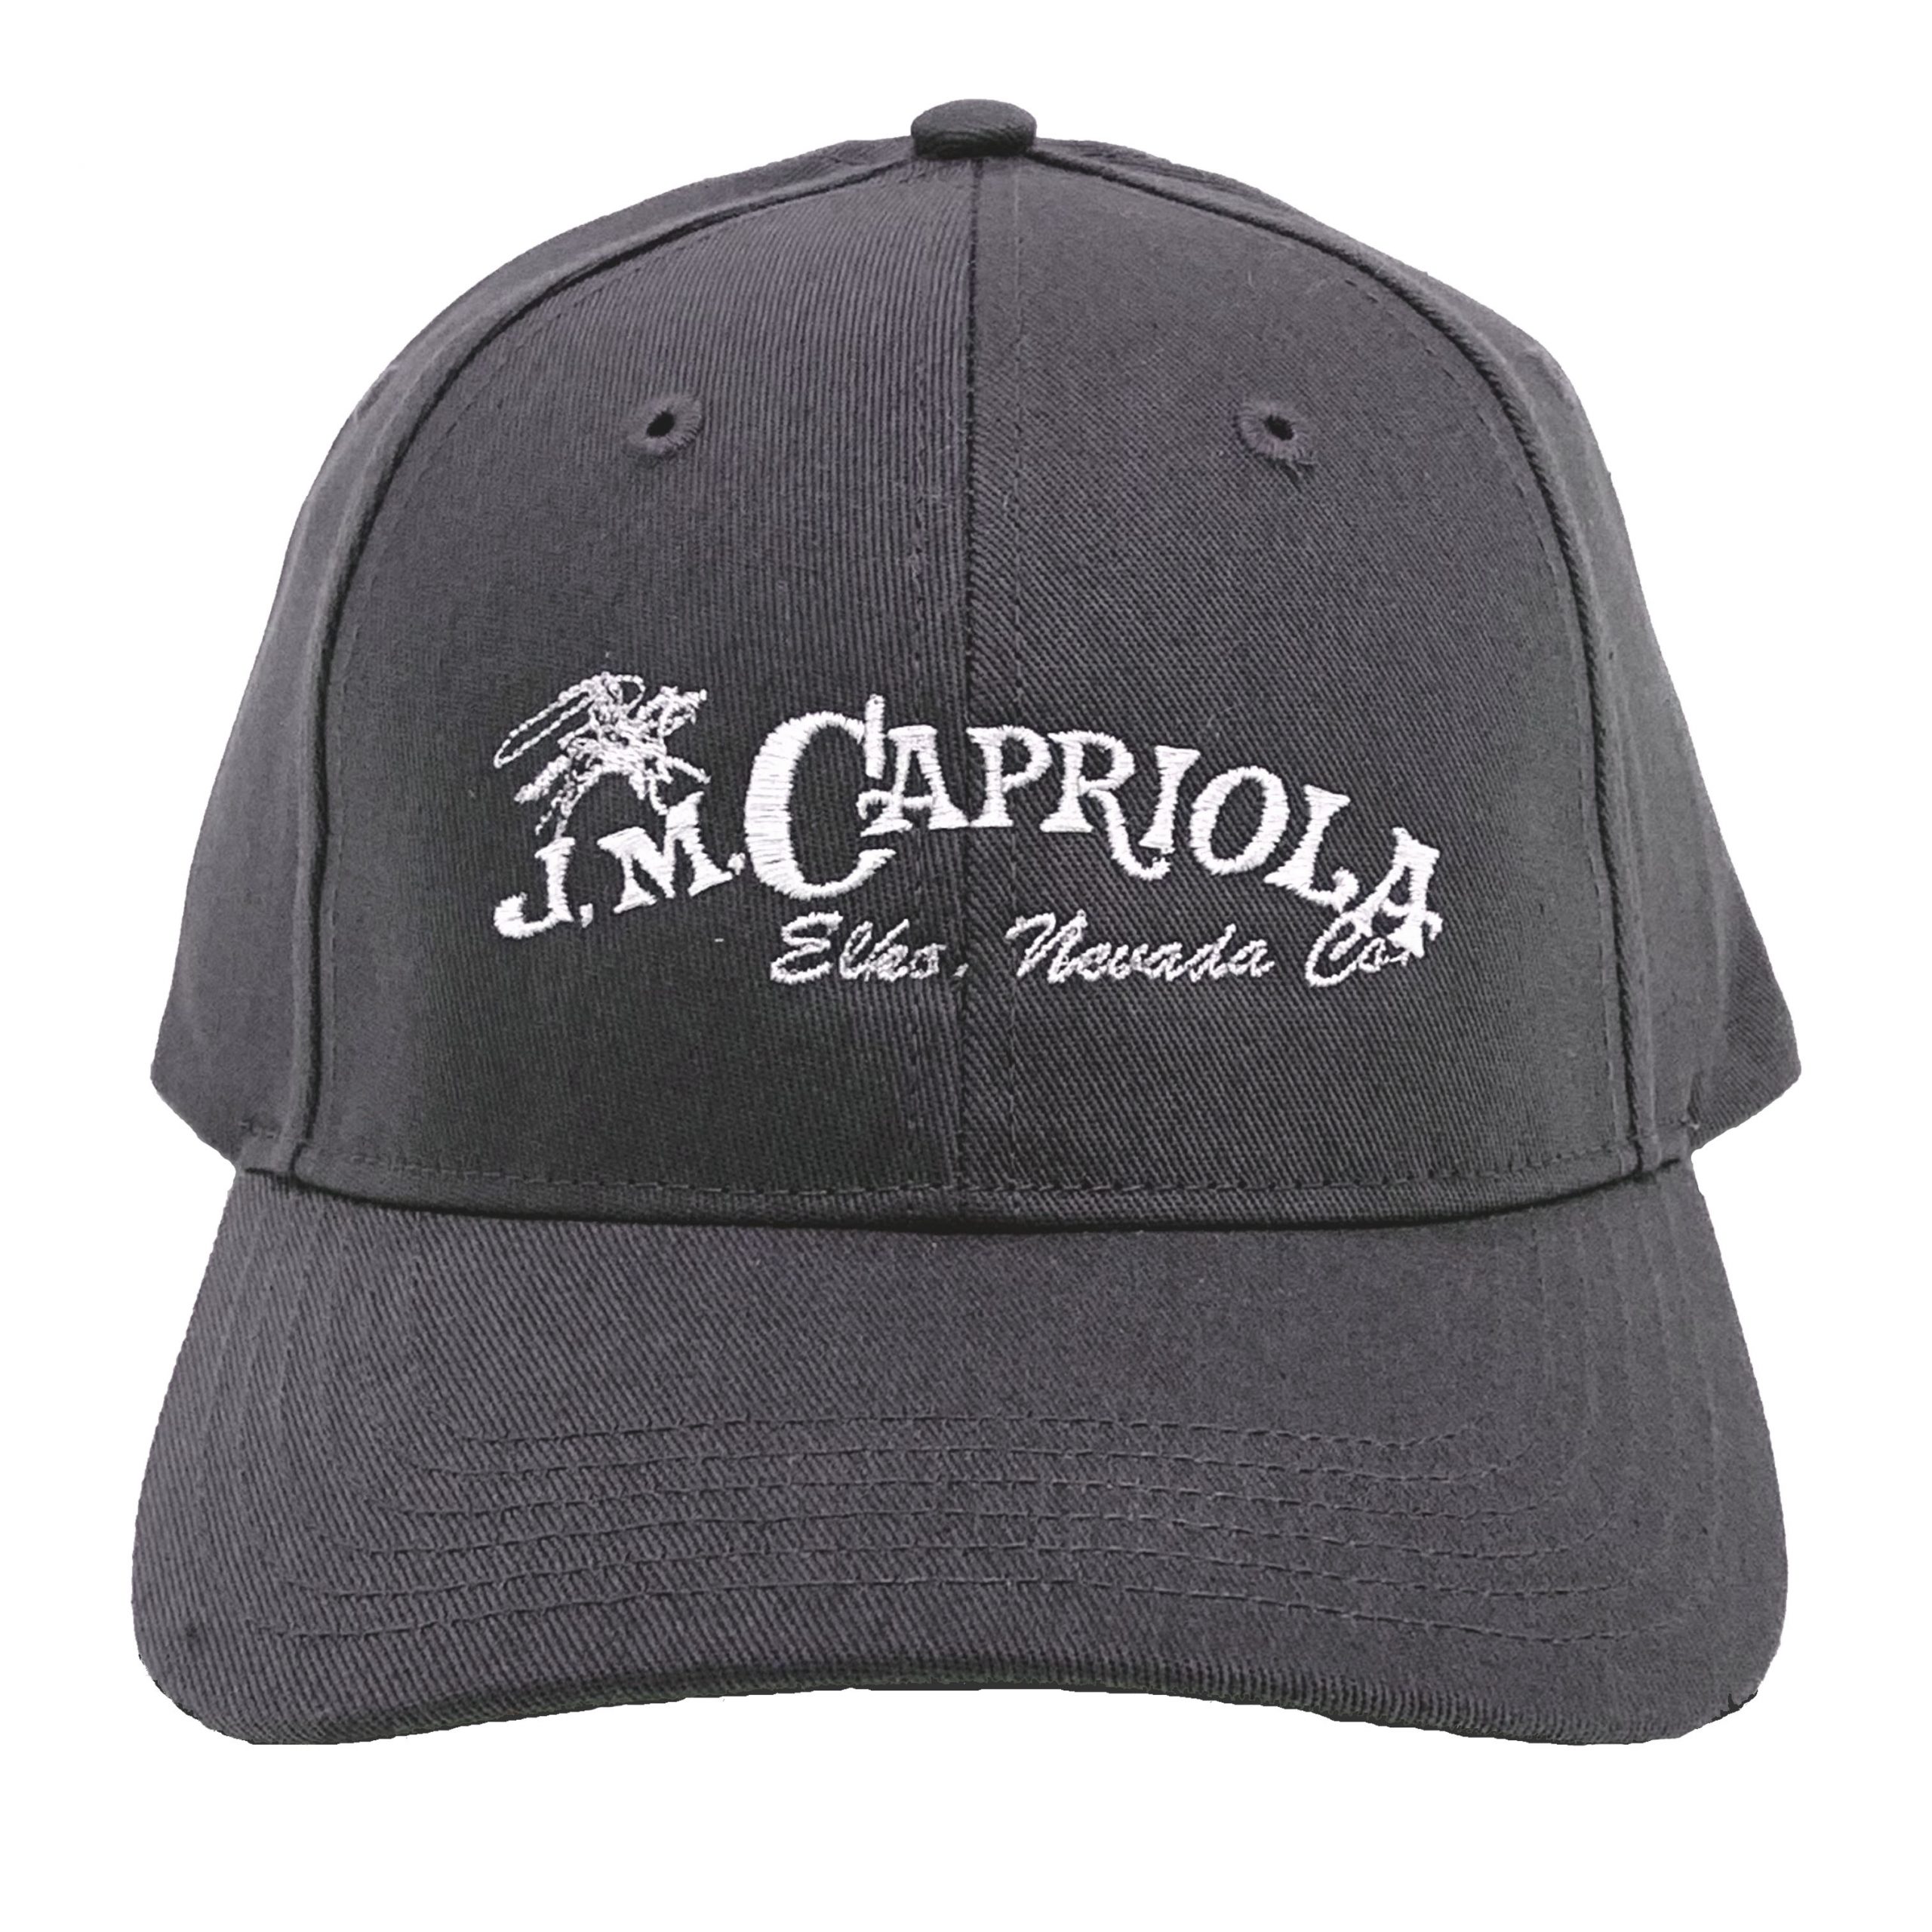 Capriola Classic Cap – J.M. Capriola